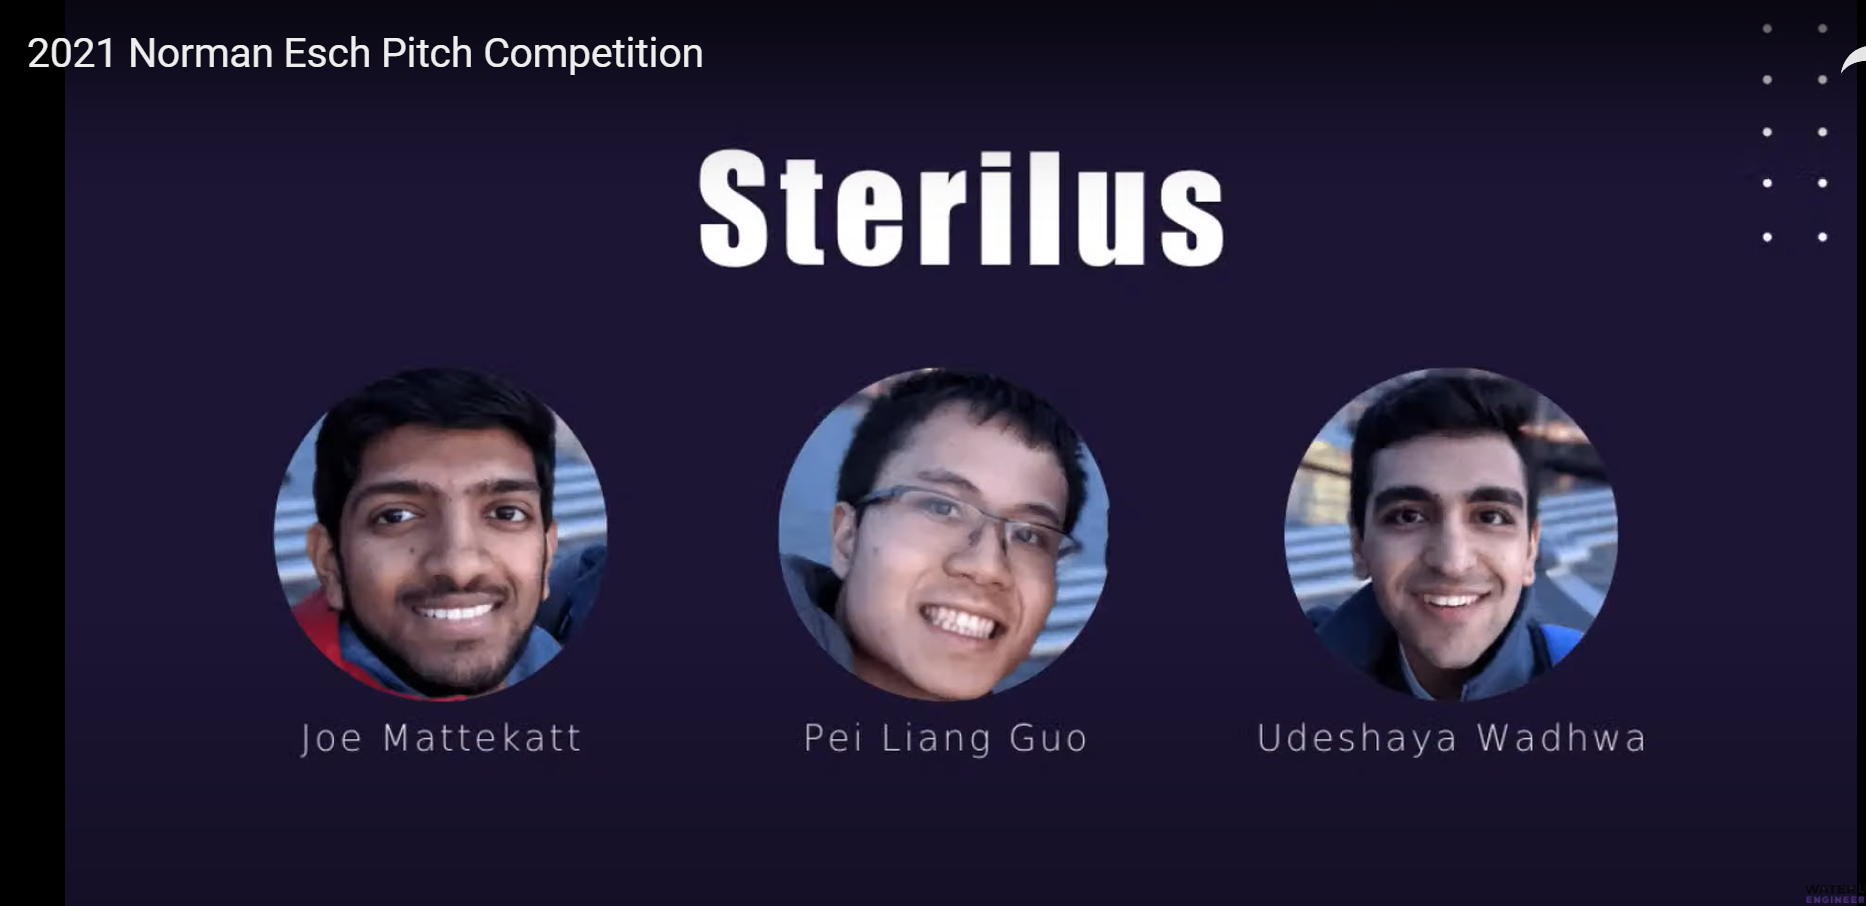 Team Sterilus